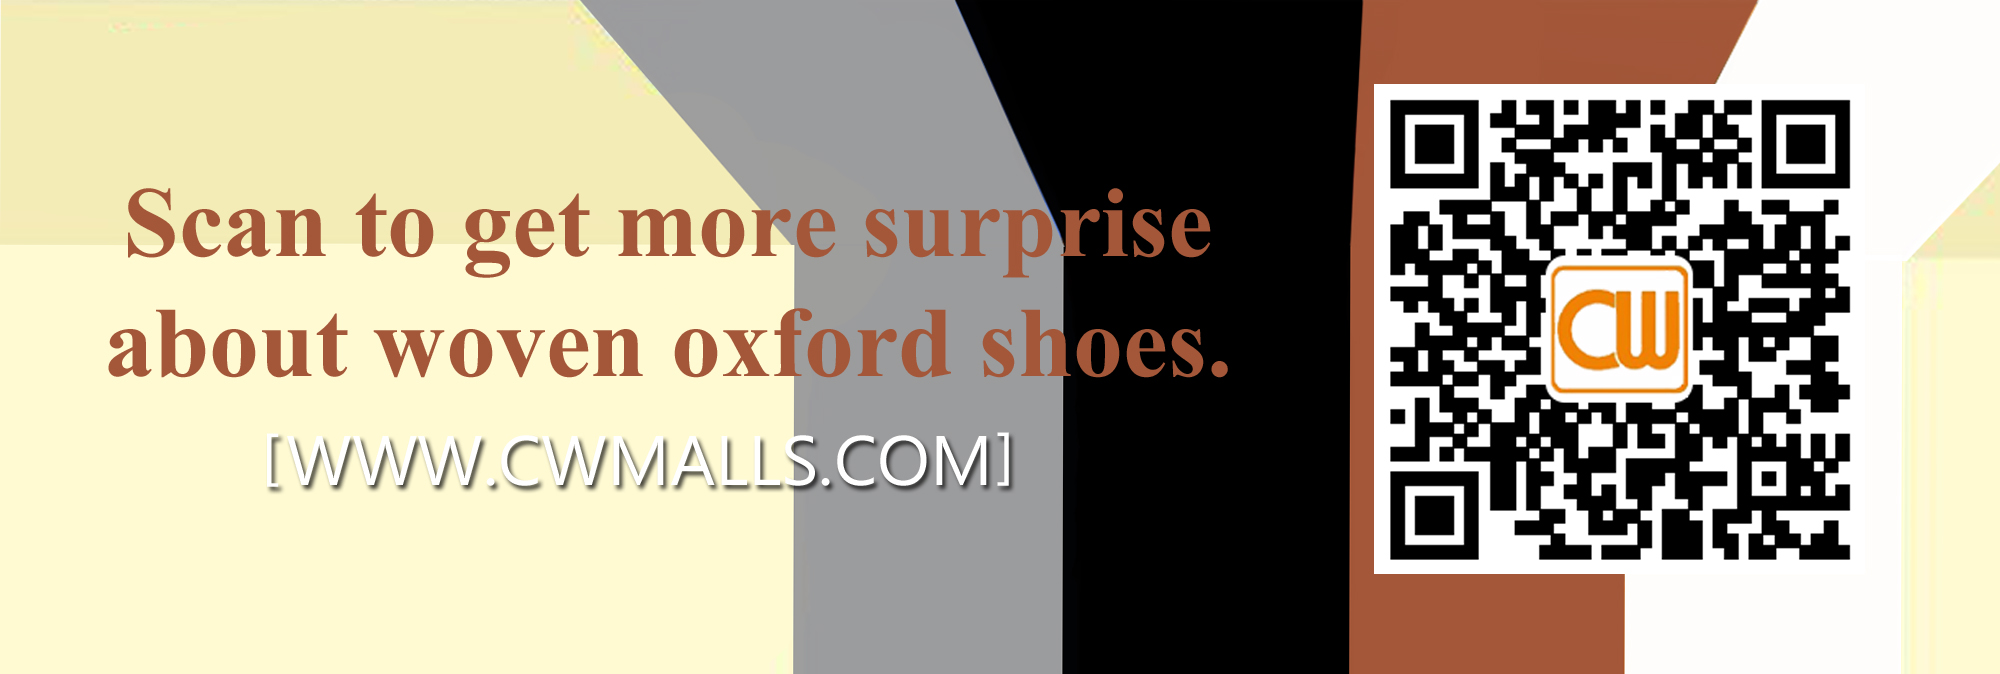 CWMALLS Woven Oxford Shoes QR .jpg